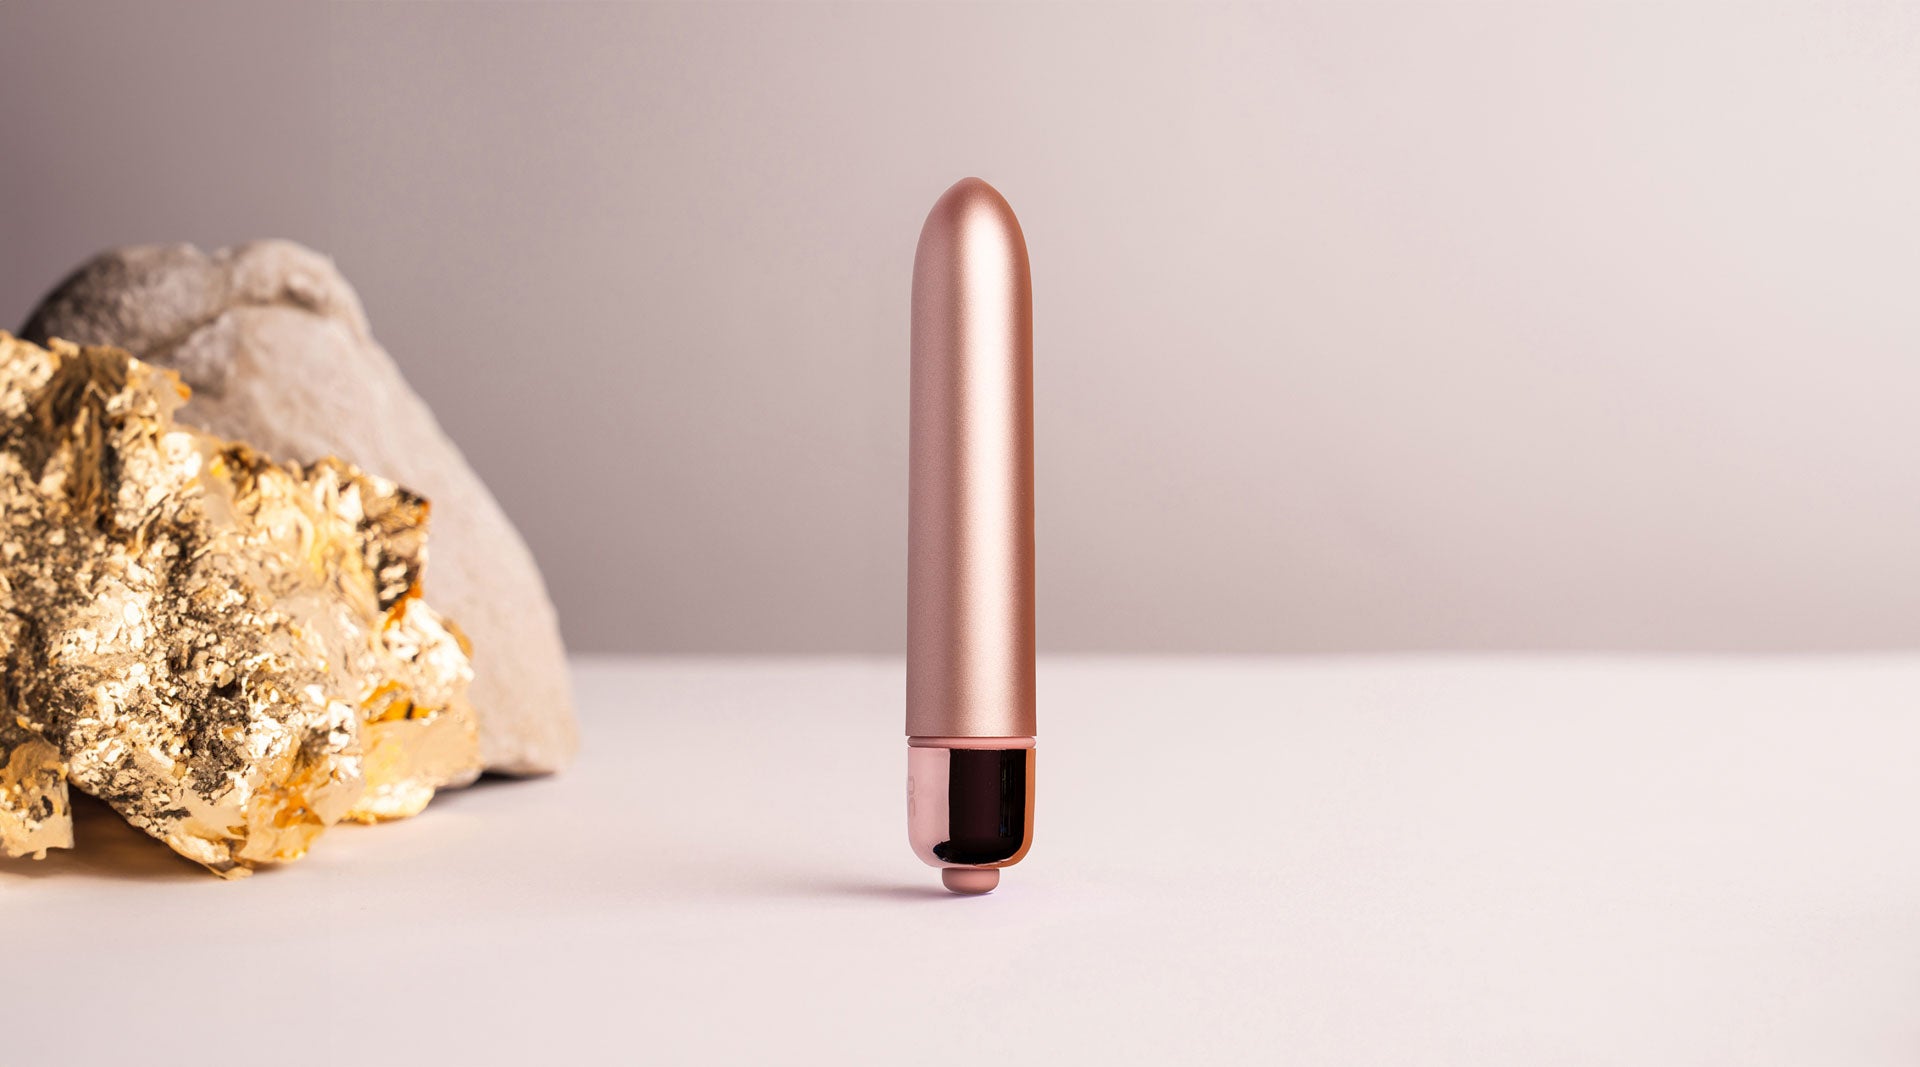 Small bullet vibrator in a matt blush colour.